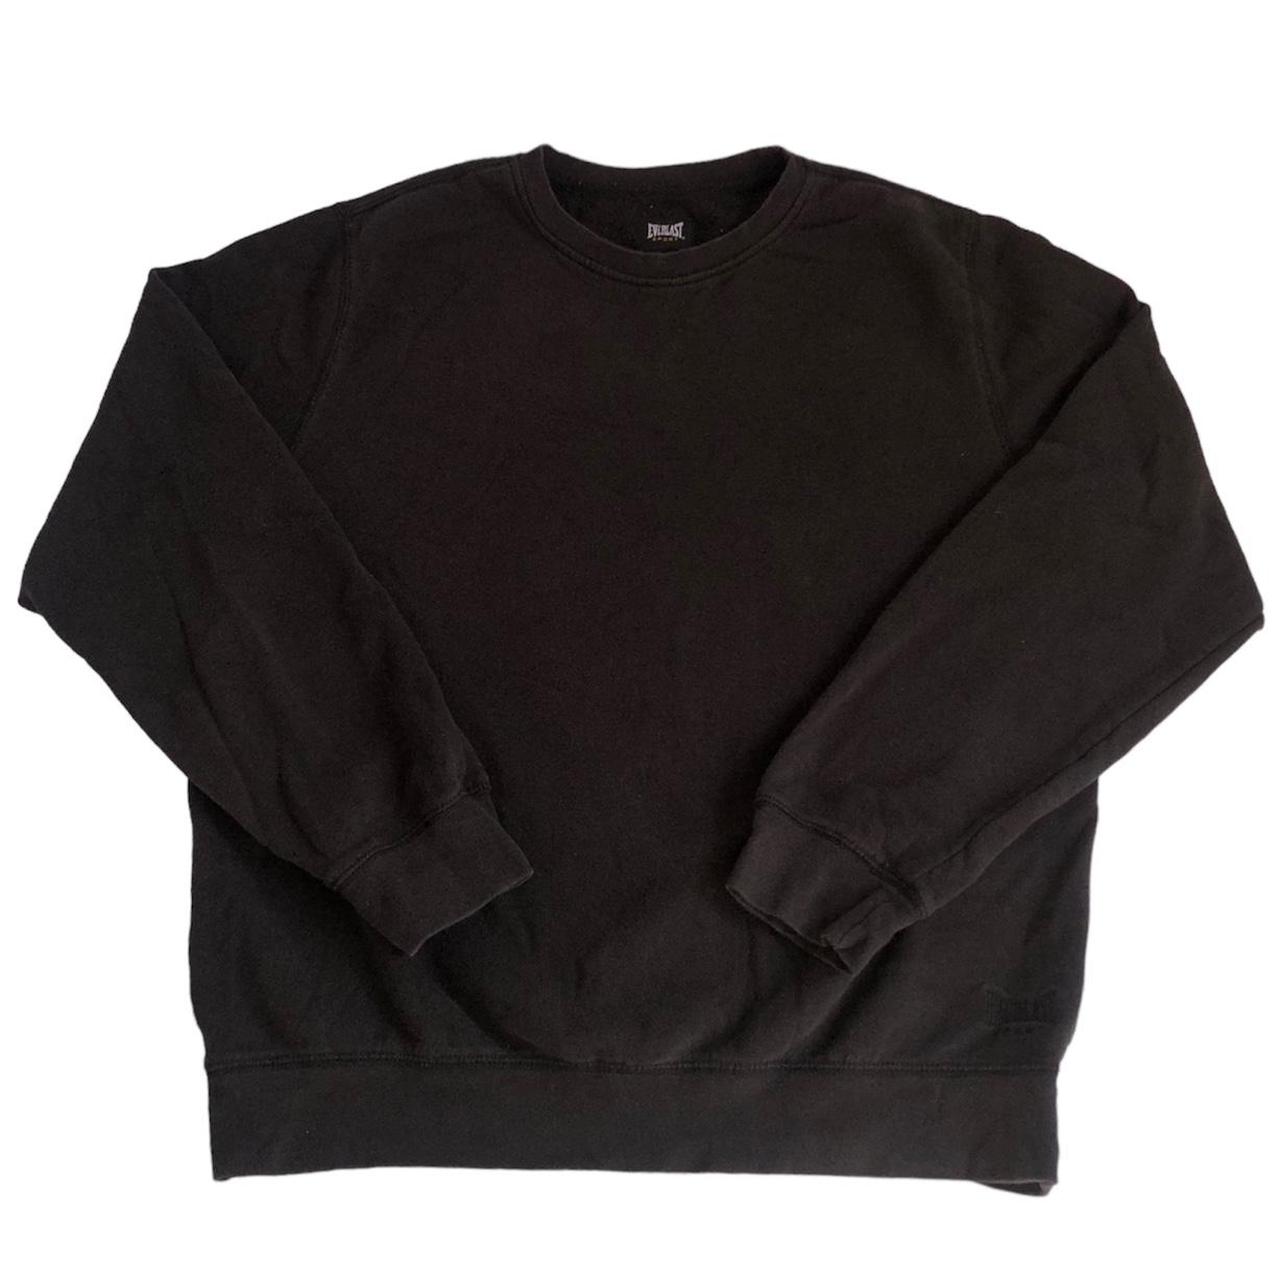 Everlast Sport Crewneck Sweatshirt Adult S Faded Black - Grungy